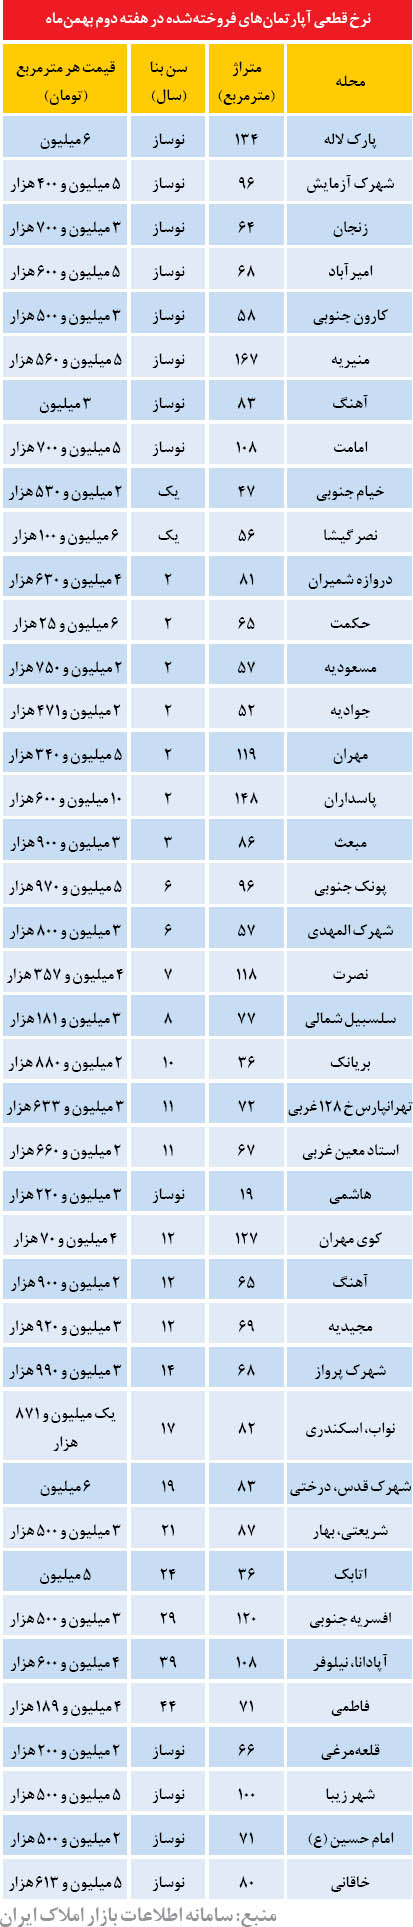 قیمت آپارتمان در زمستان تهران (جدول)